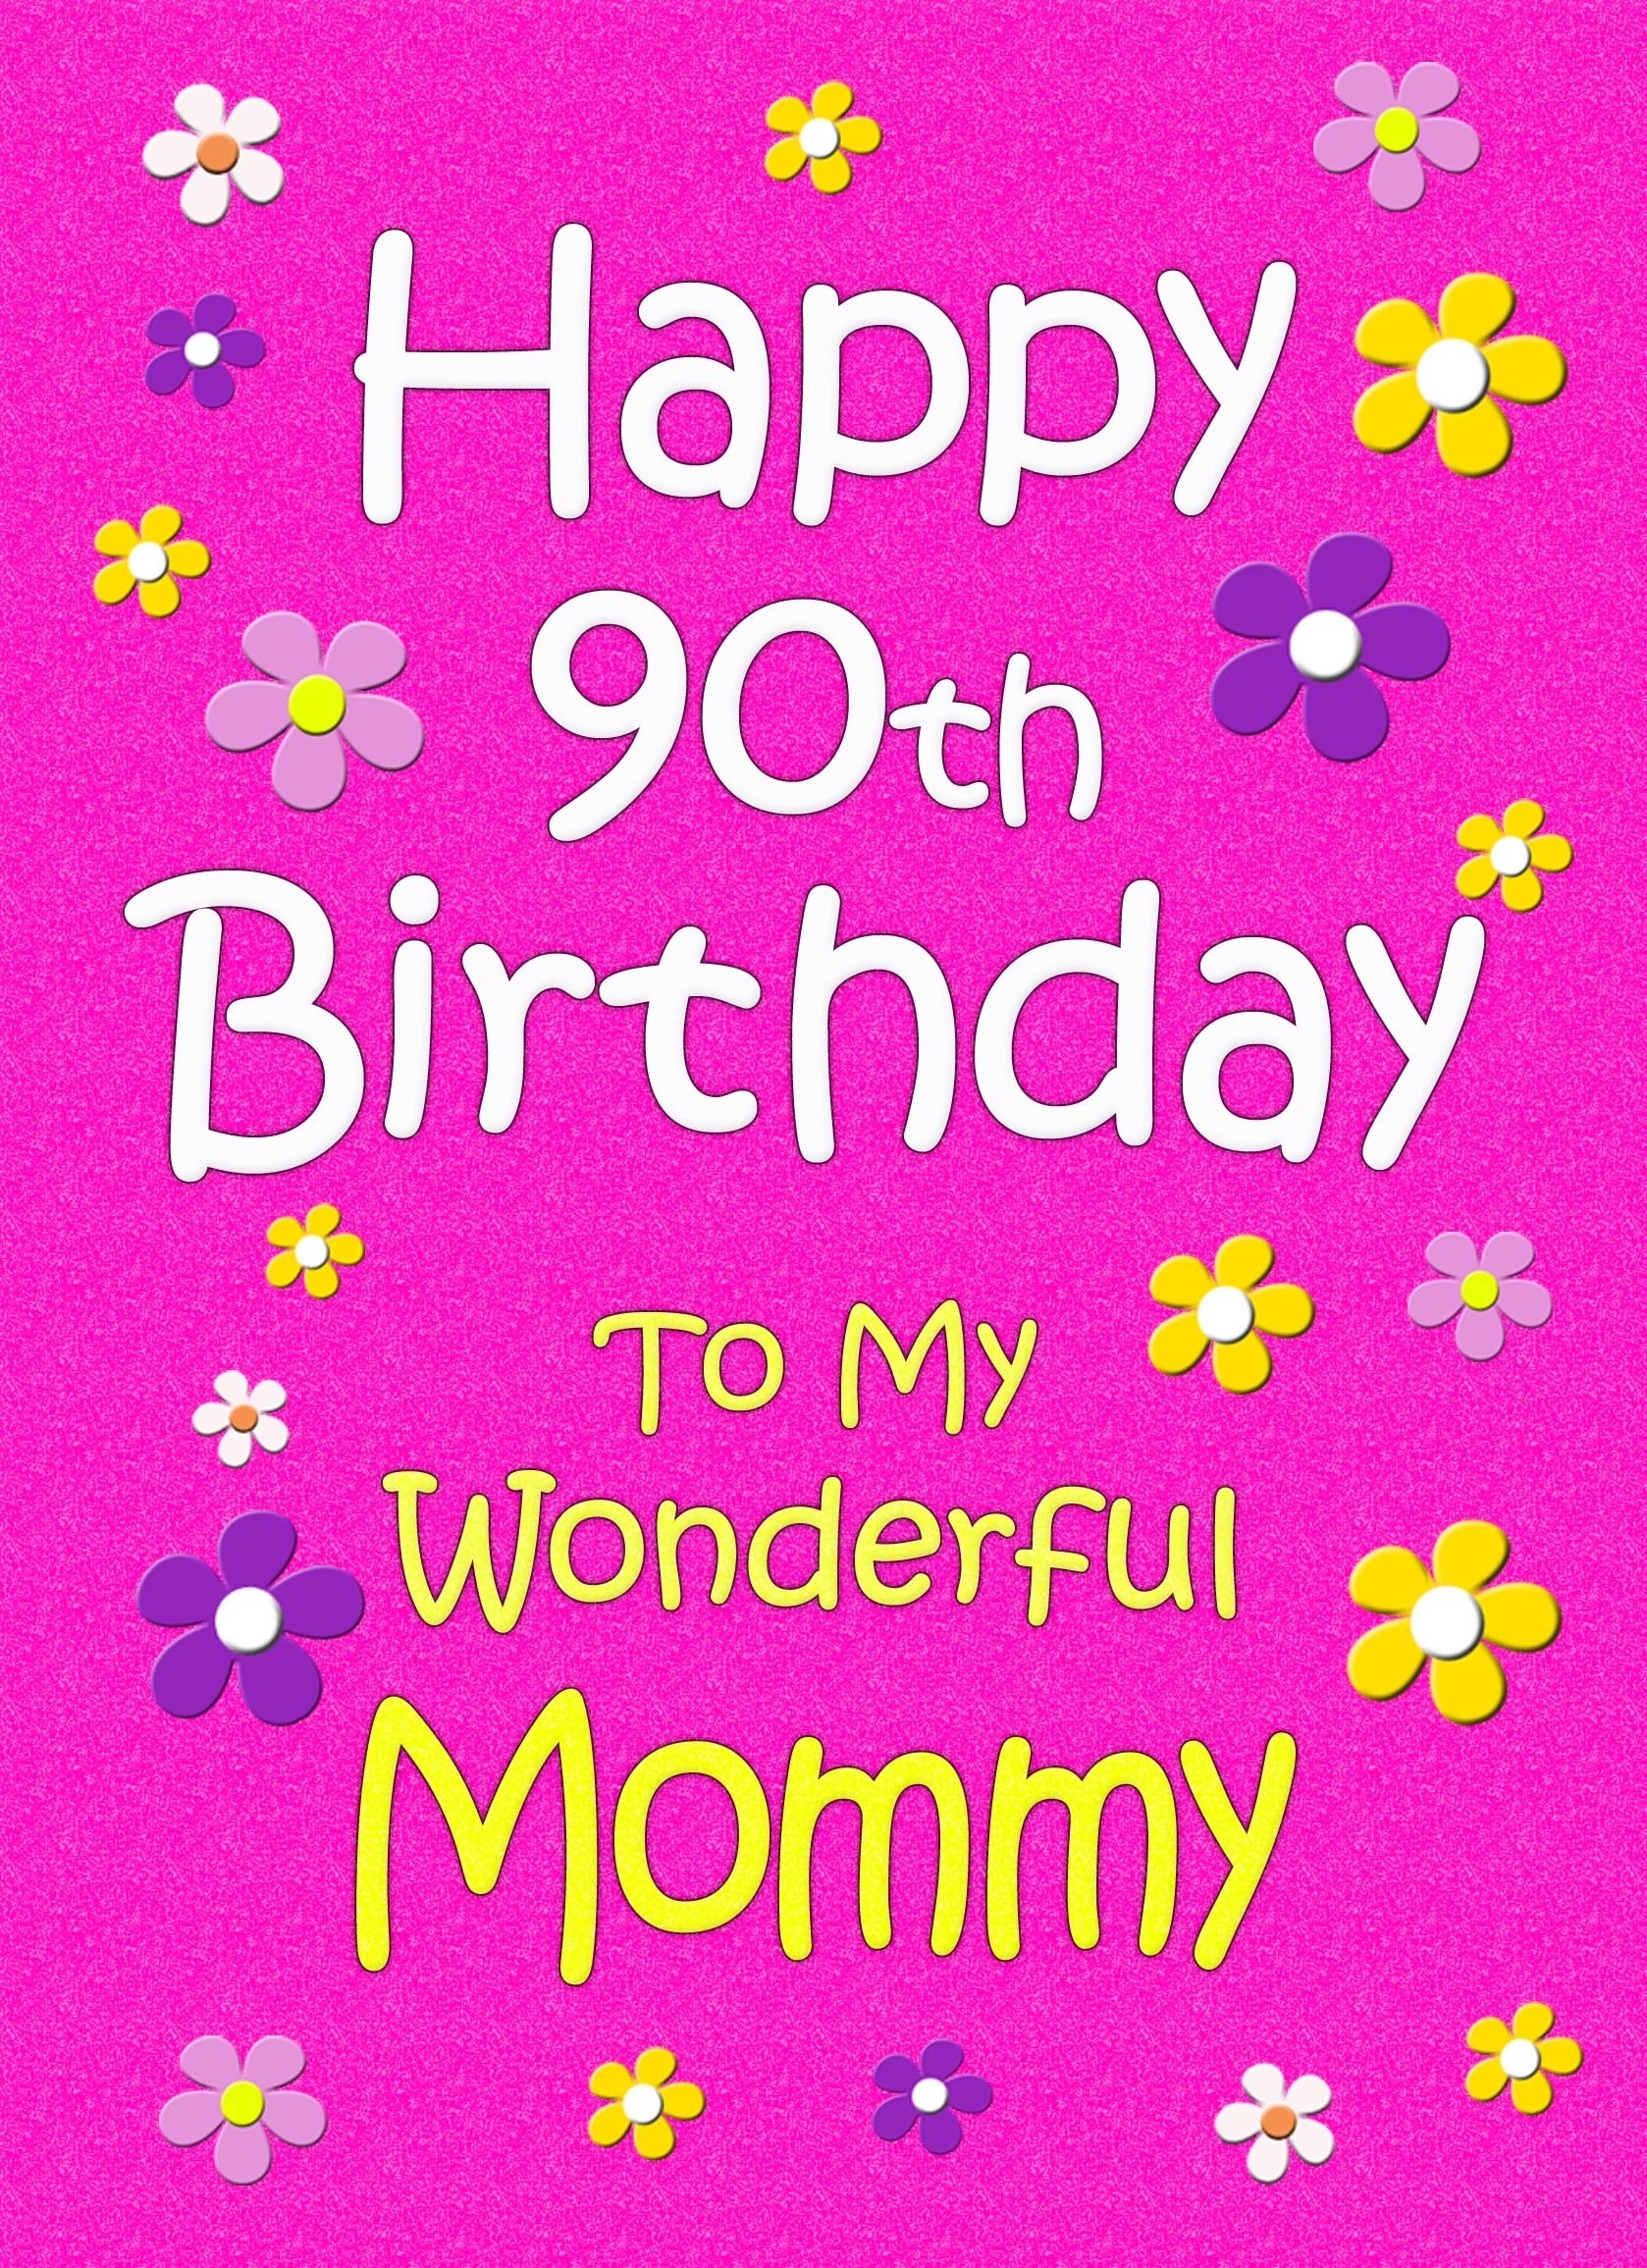 Mommy 90th Birthday Card (Pink)